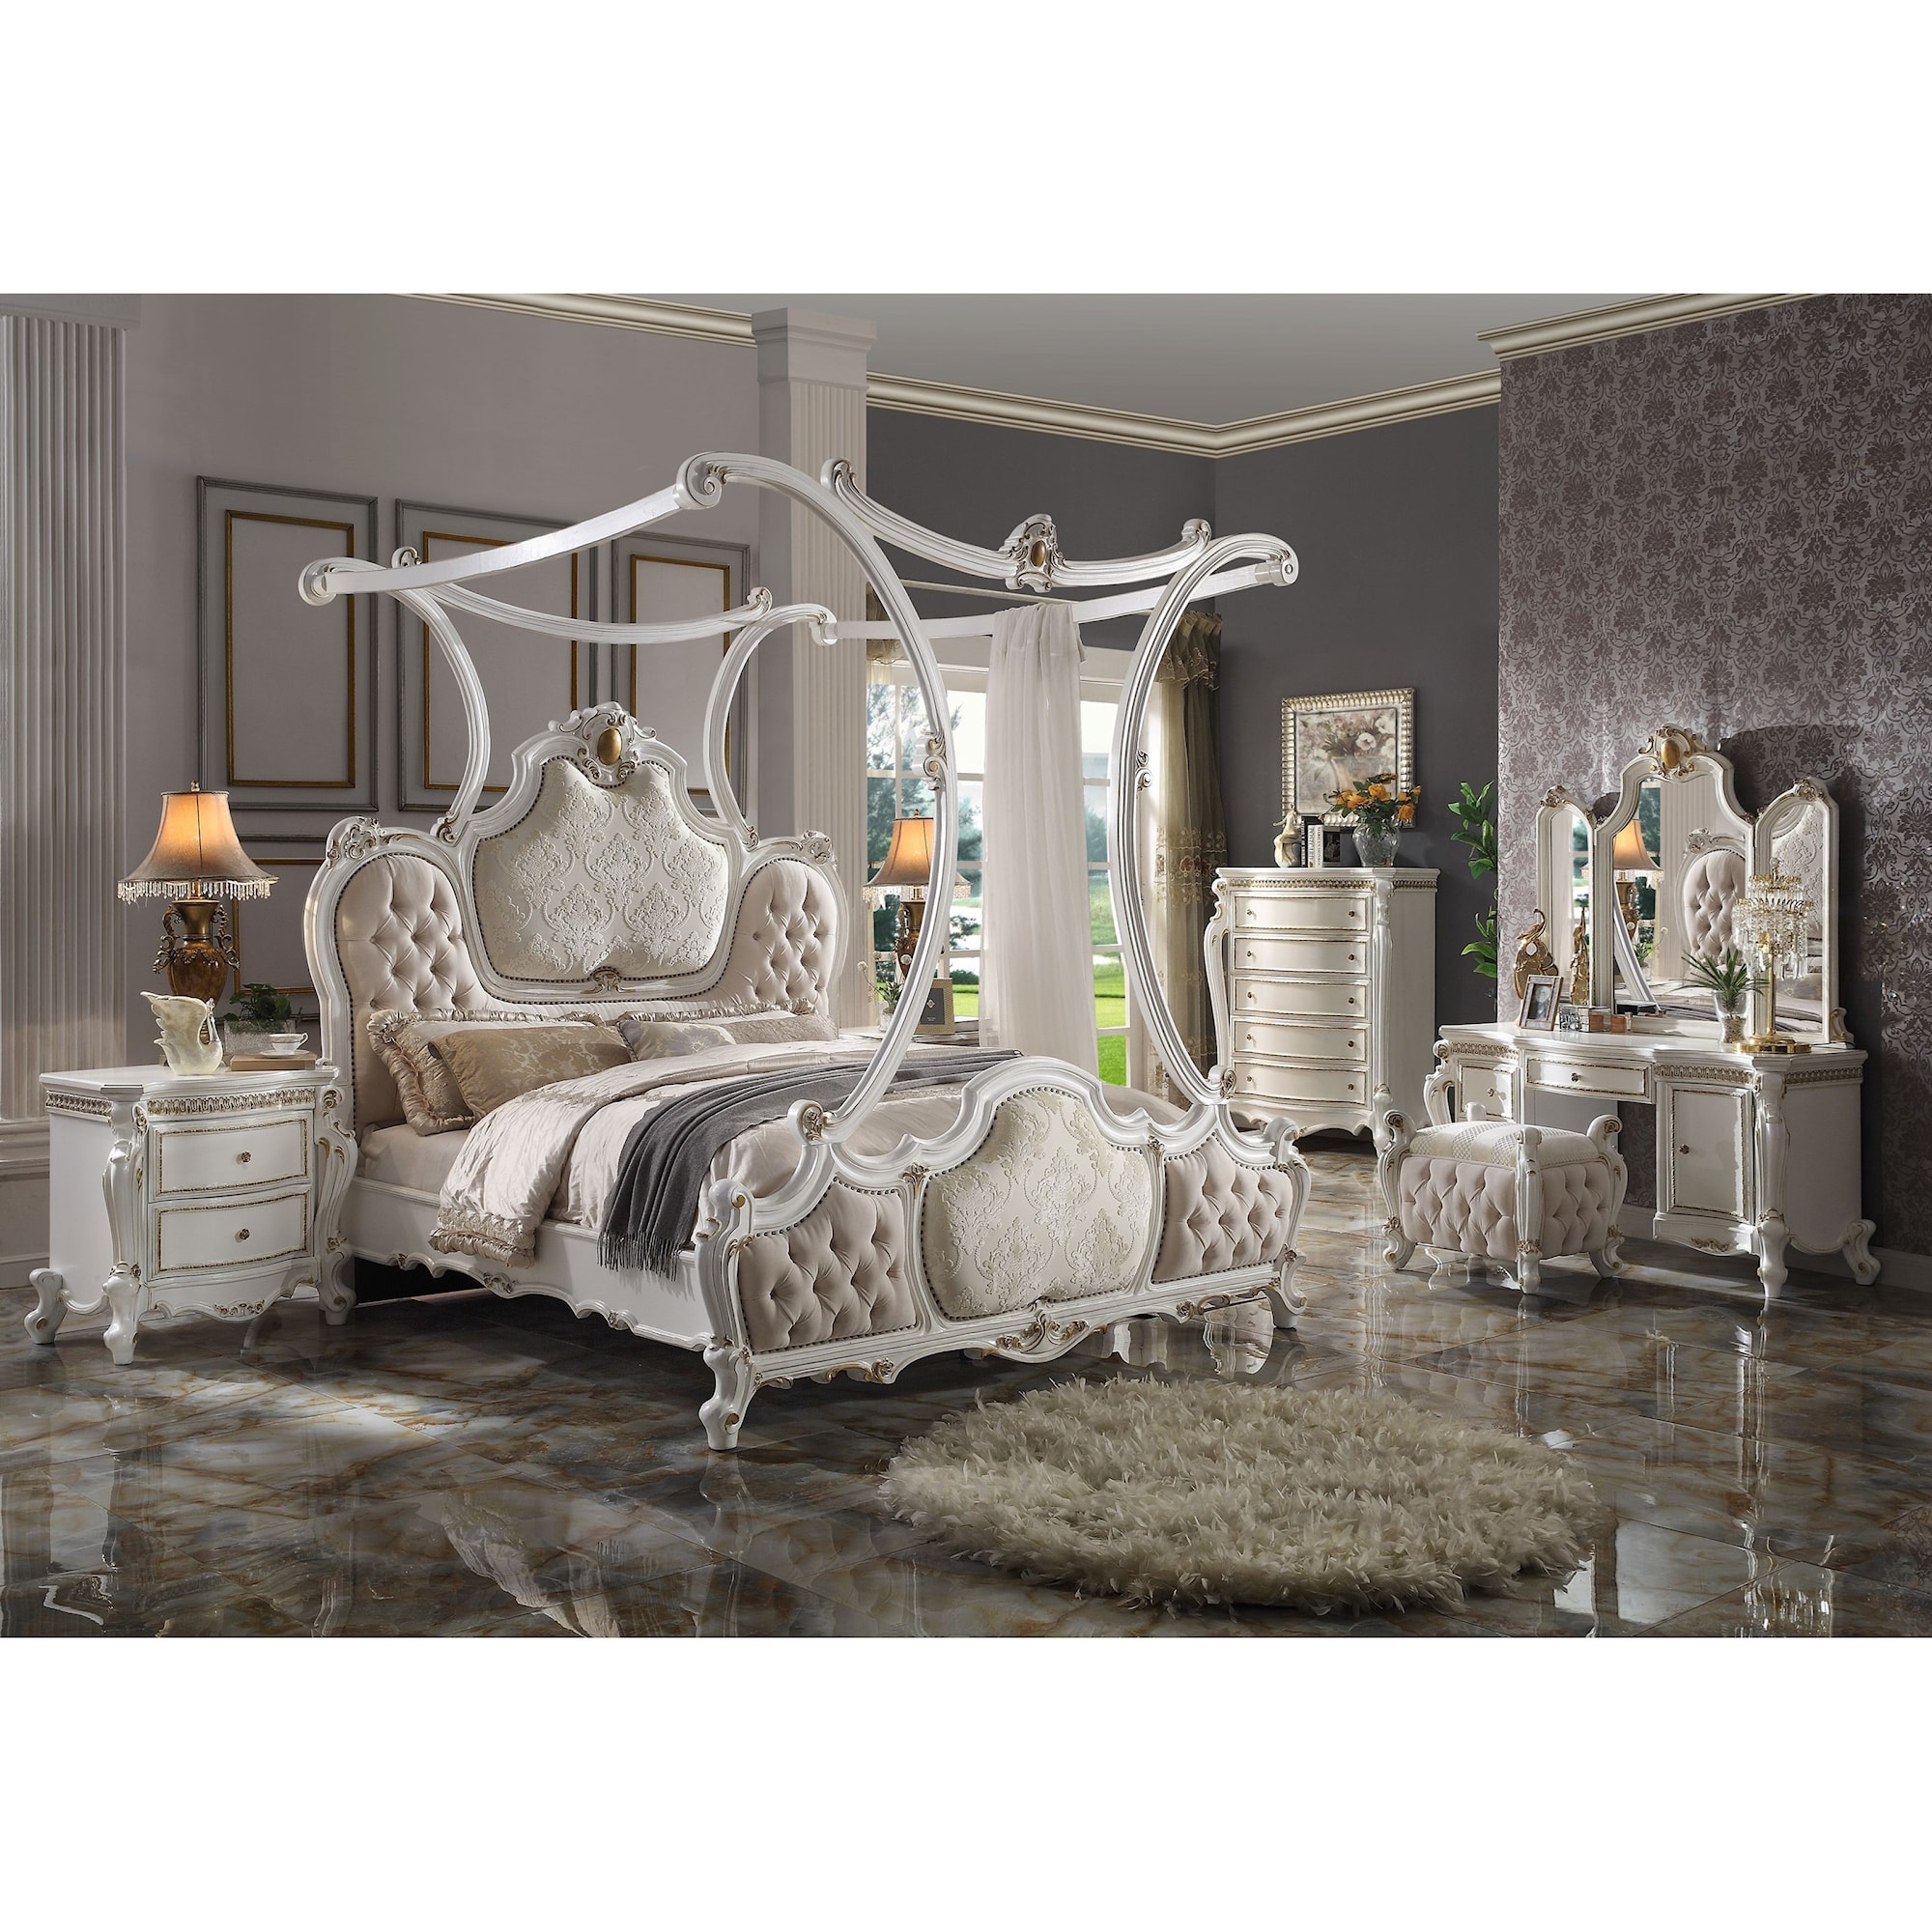 king canopy bedroom sets